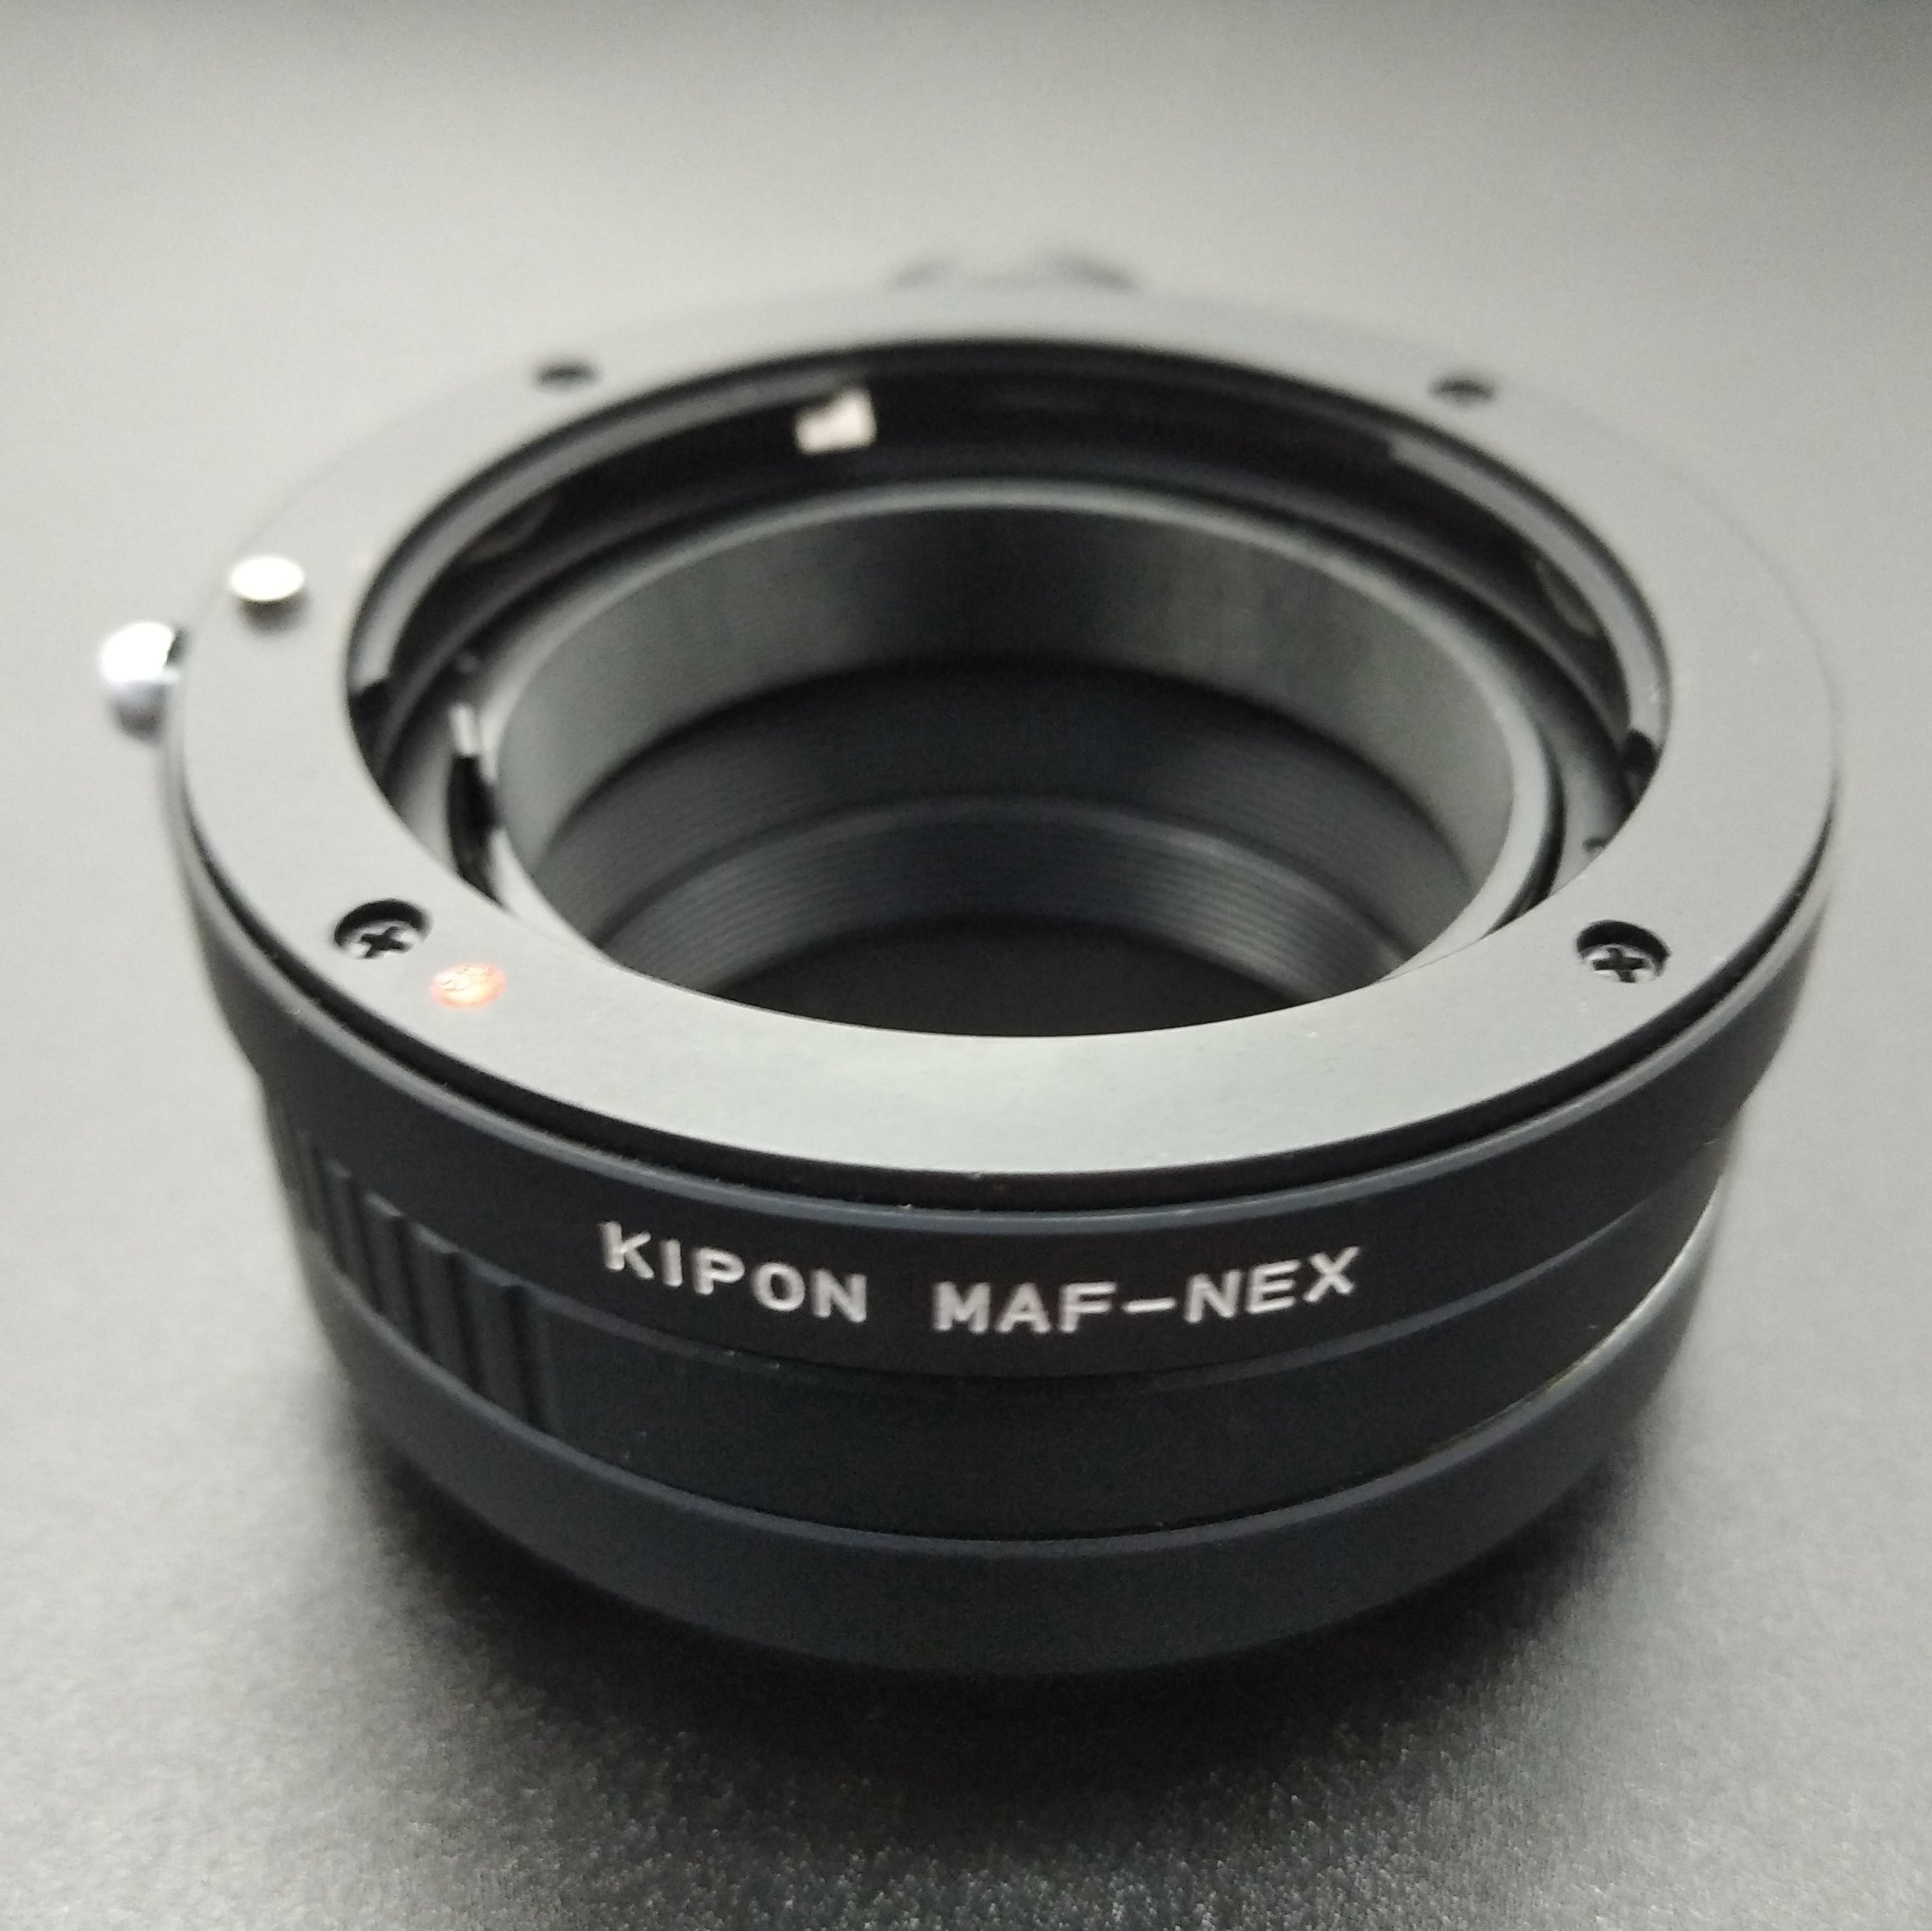 Kipon Minolta AF Sony A mount lens to Sony NEX E mount mirrorless camera adapter (old) - A7 A7R IV V A7S III A6000 A6500 A5000